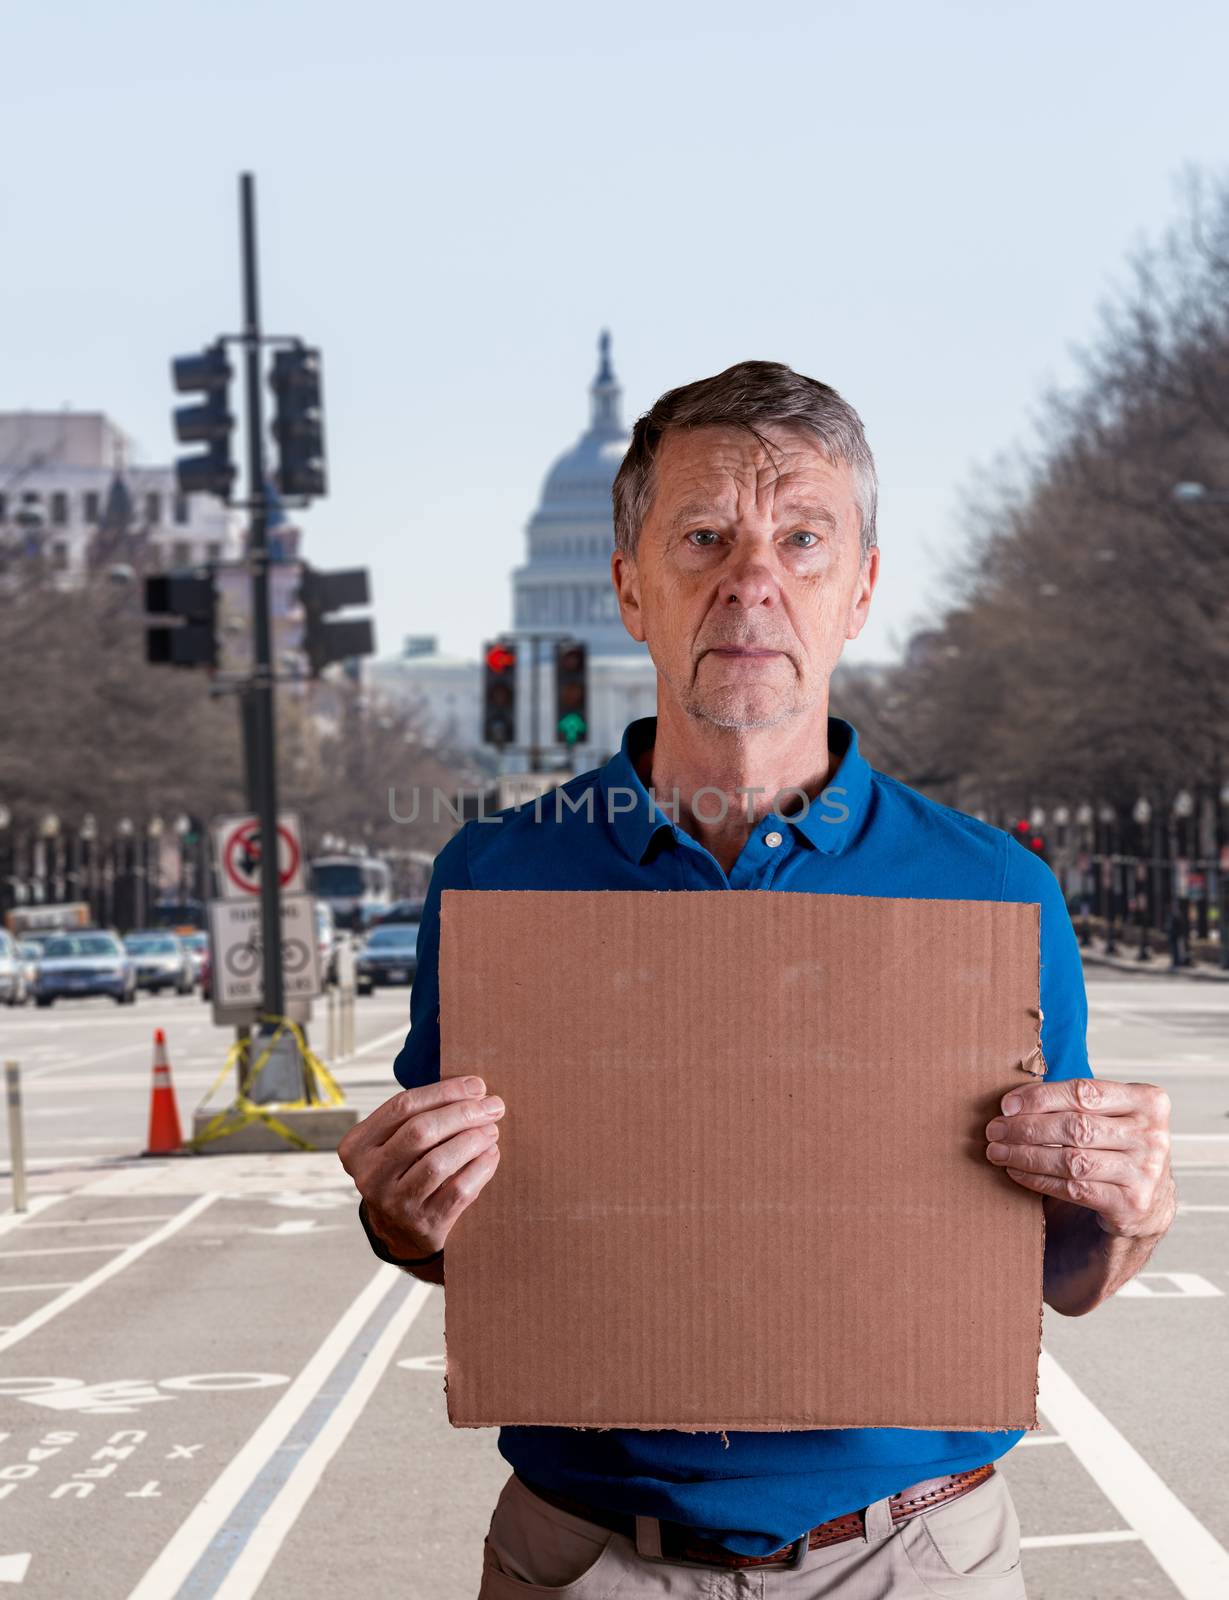 Senior man holding a blank cardboard sign in Pennsylvania Avenue, DC by steheap